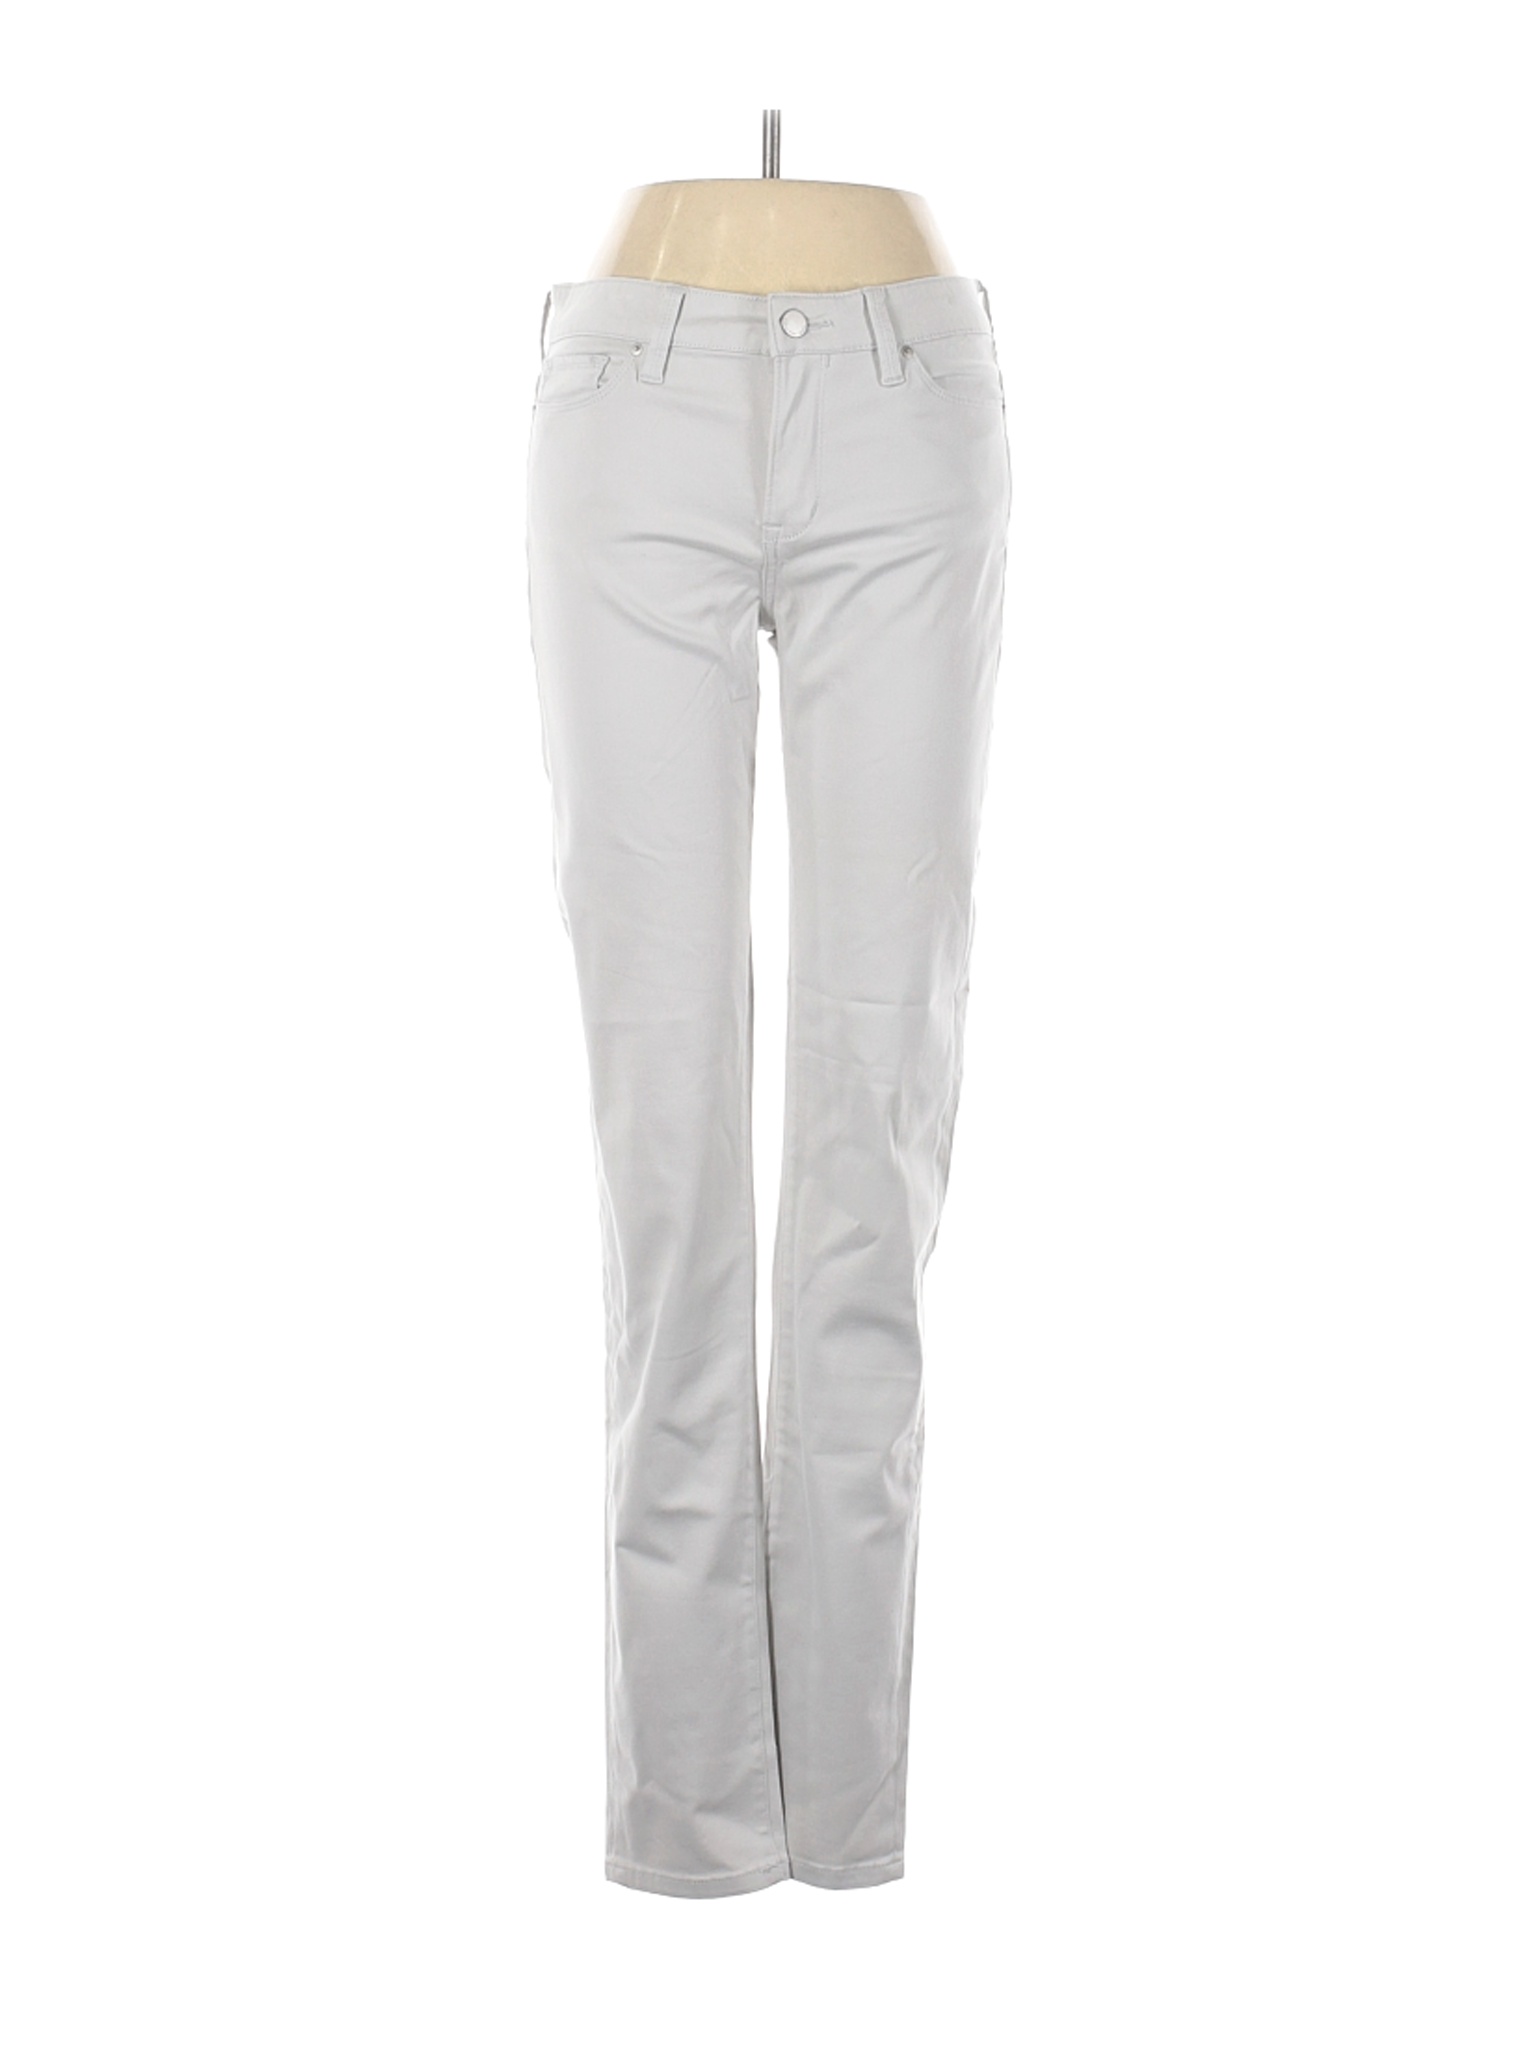 CALVIN KLEIN JEANS Women White Jeans 4